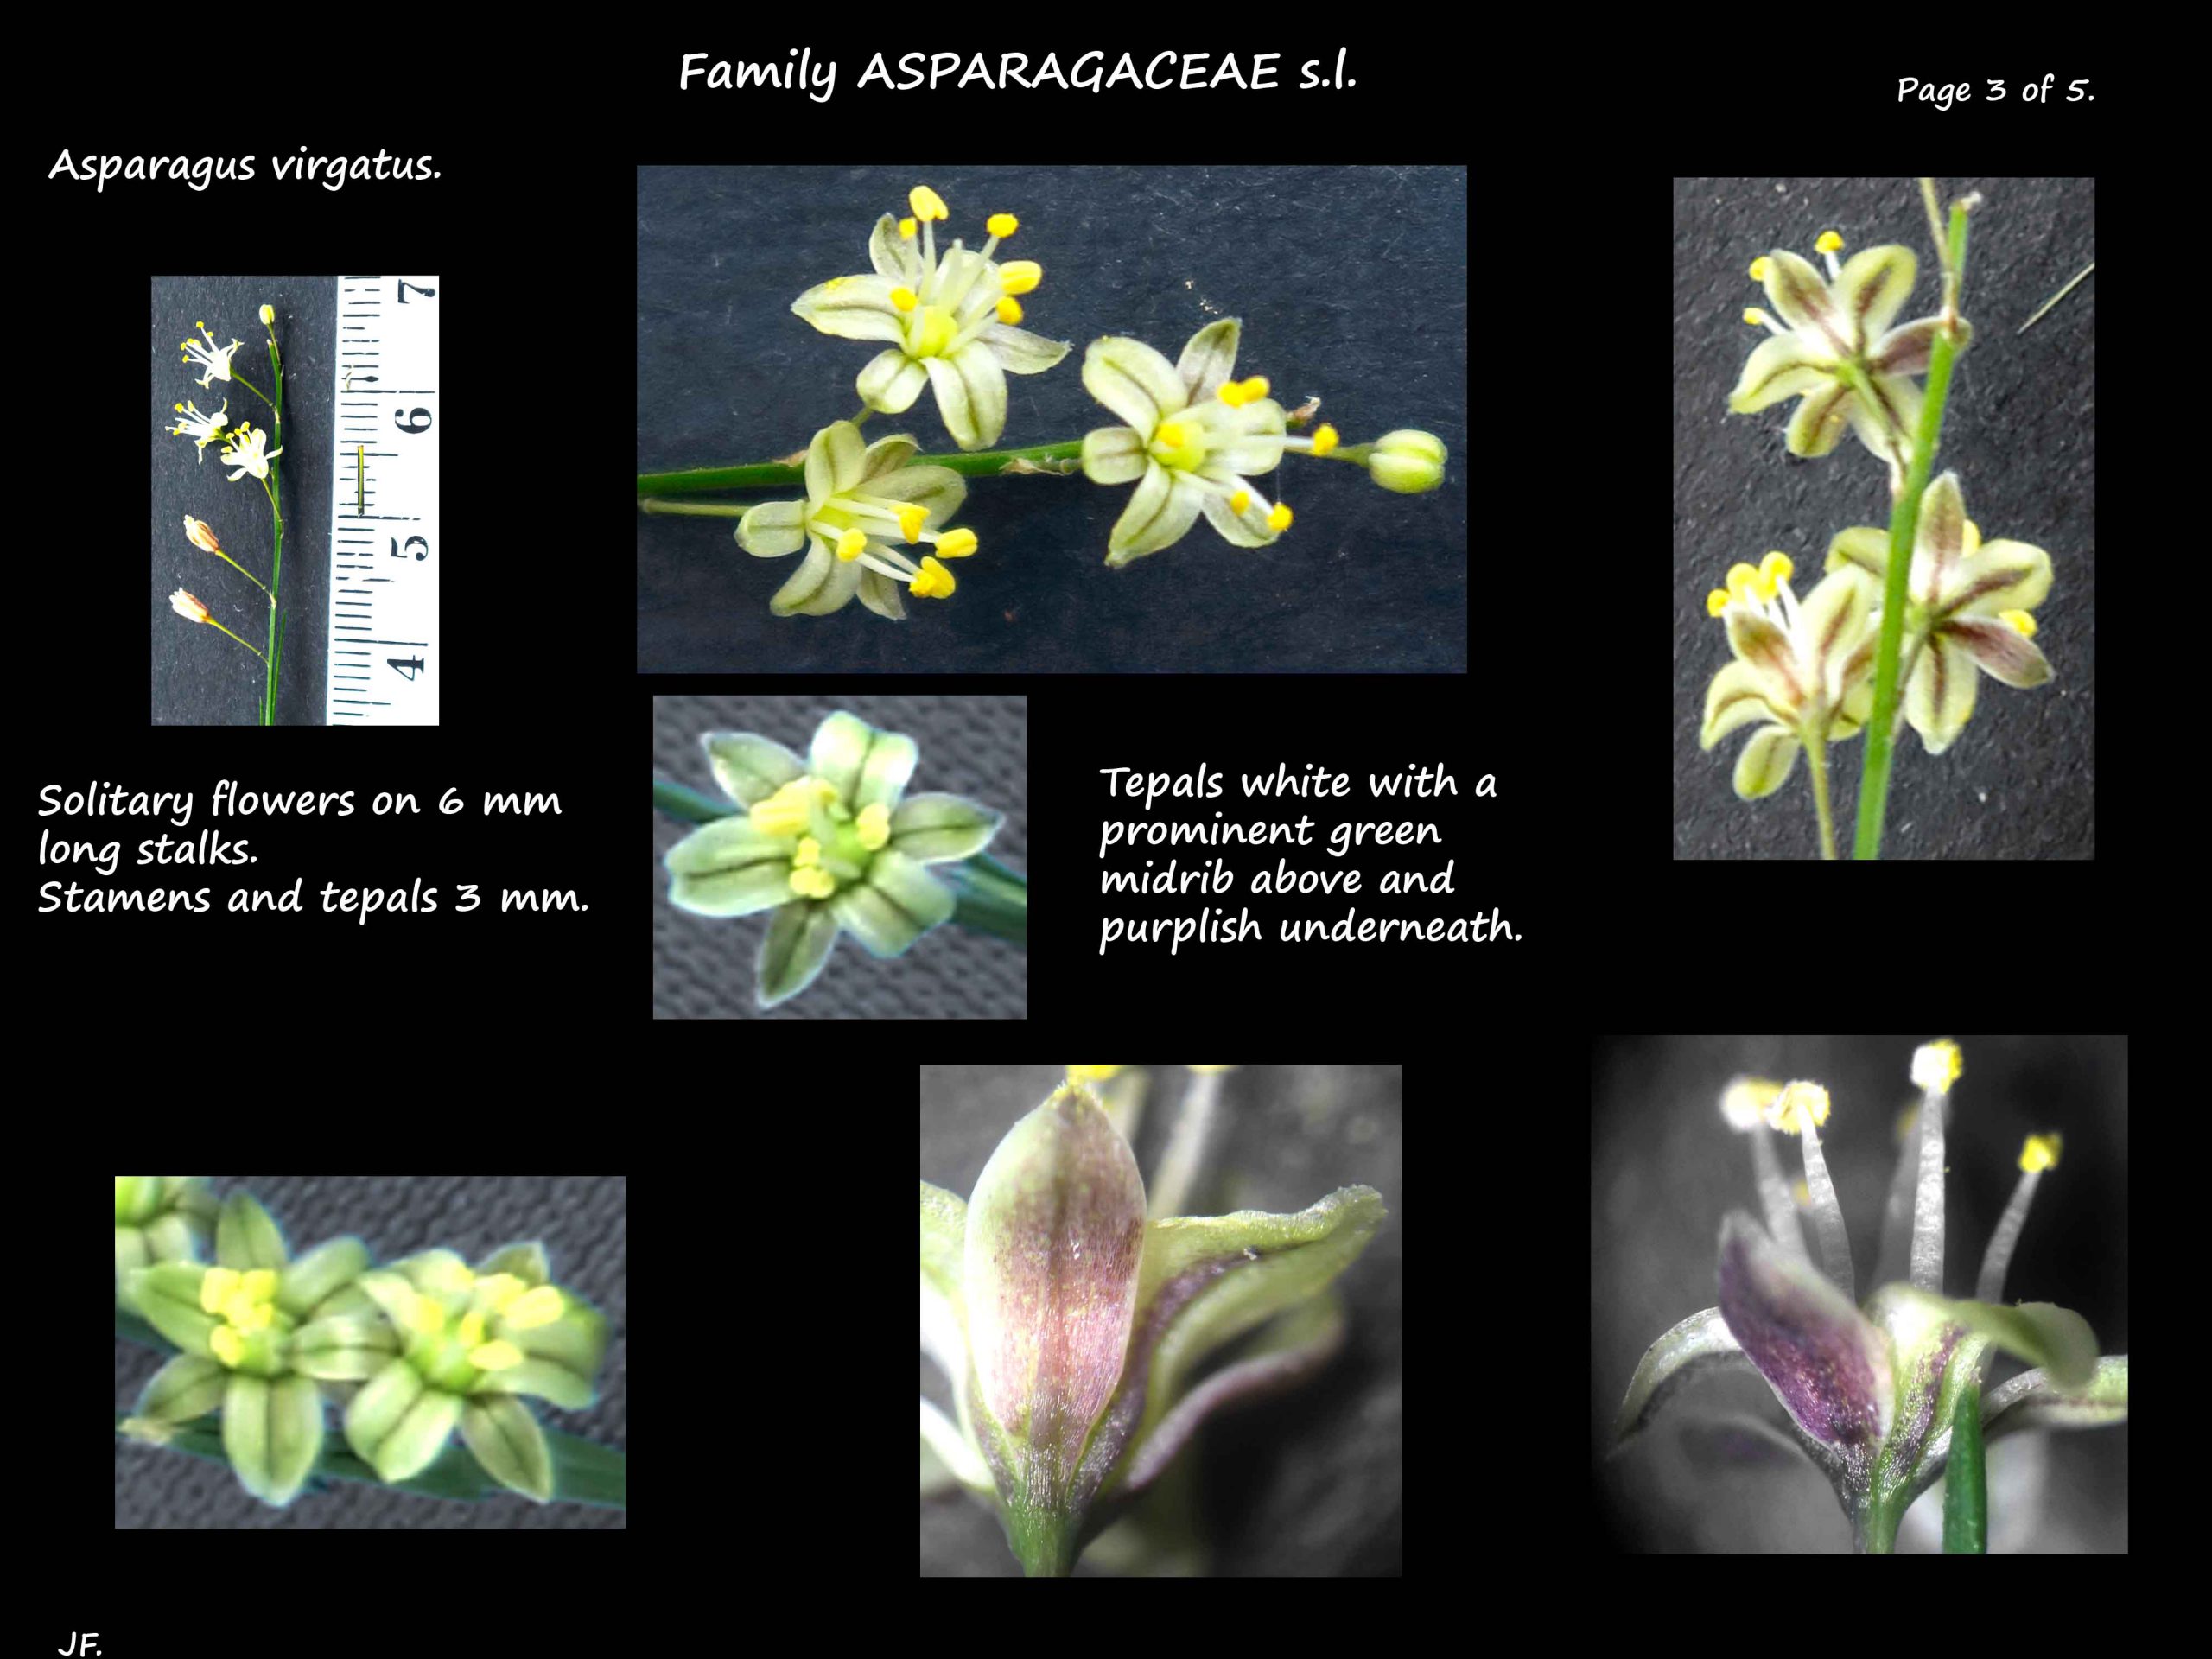 3 Asparagus virgatus flowers